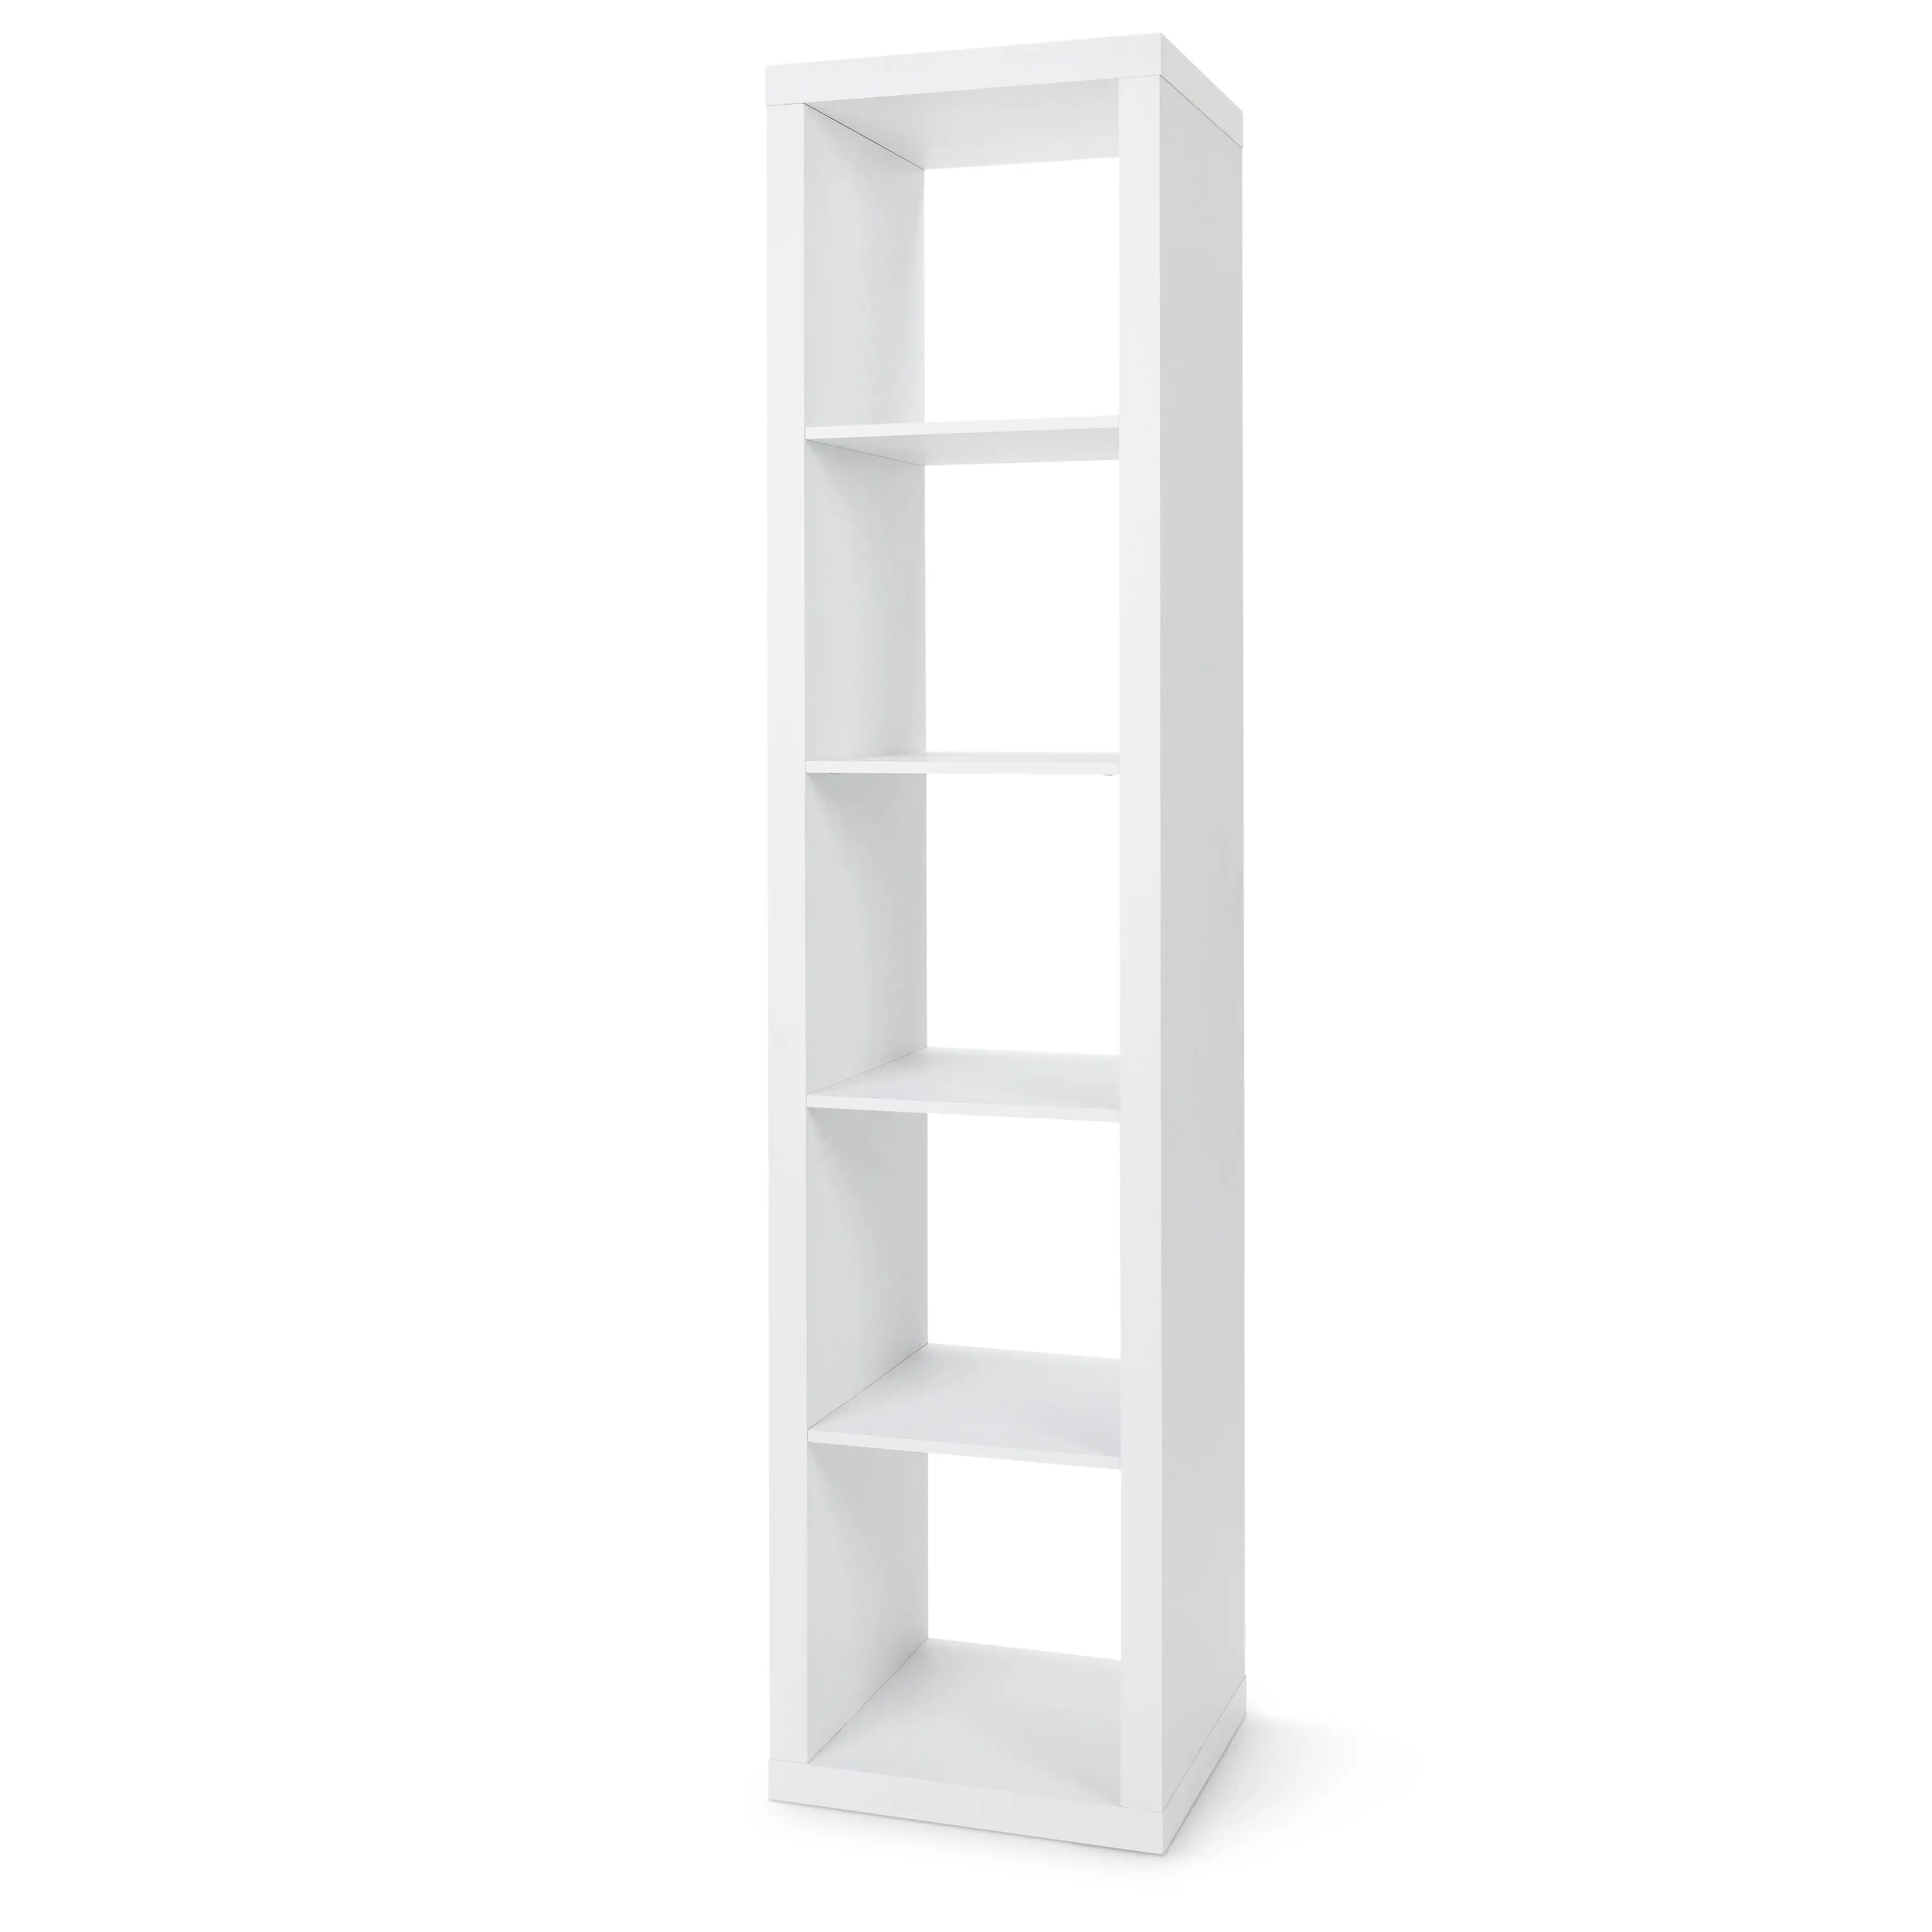 

Better Homes & Gardens 5-Cube Vertical Storage Organizer, White Texture furniture storage cabinet living room cabinets